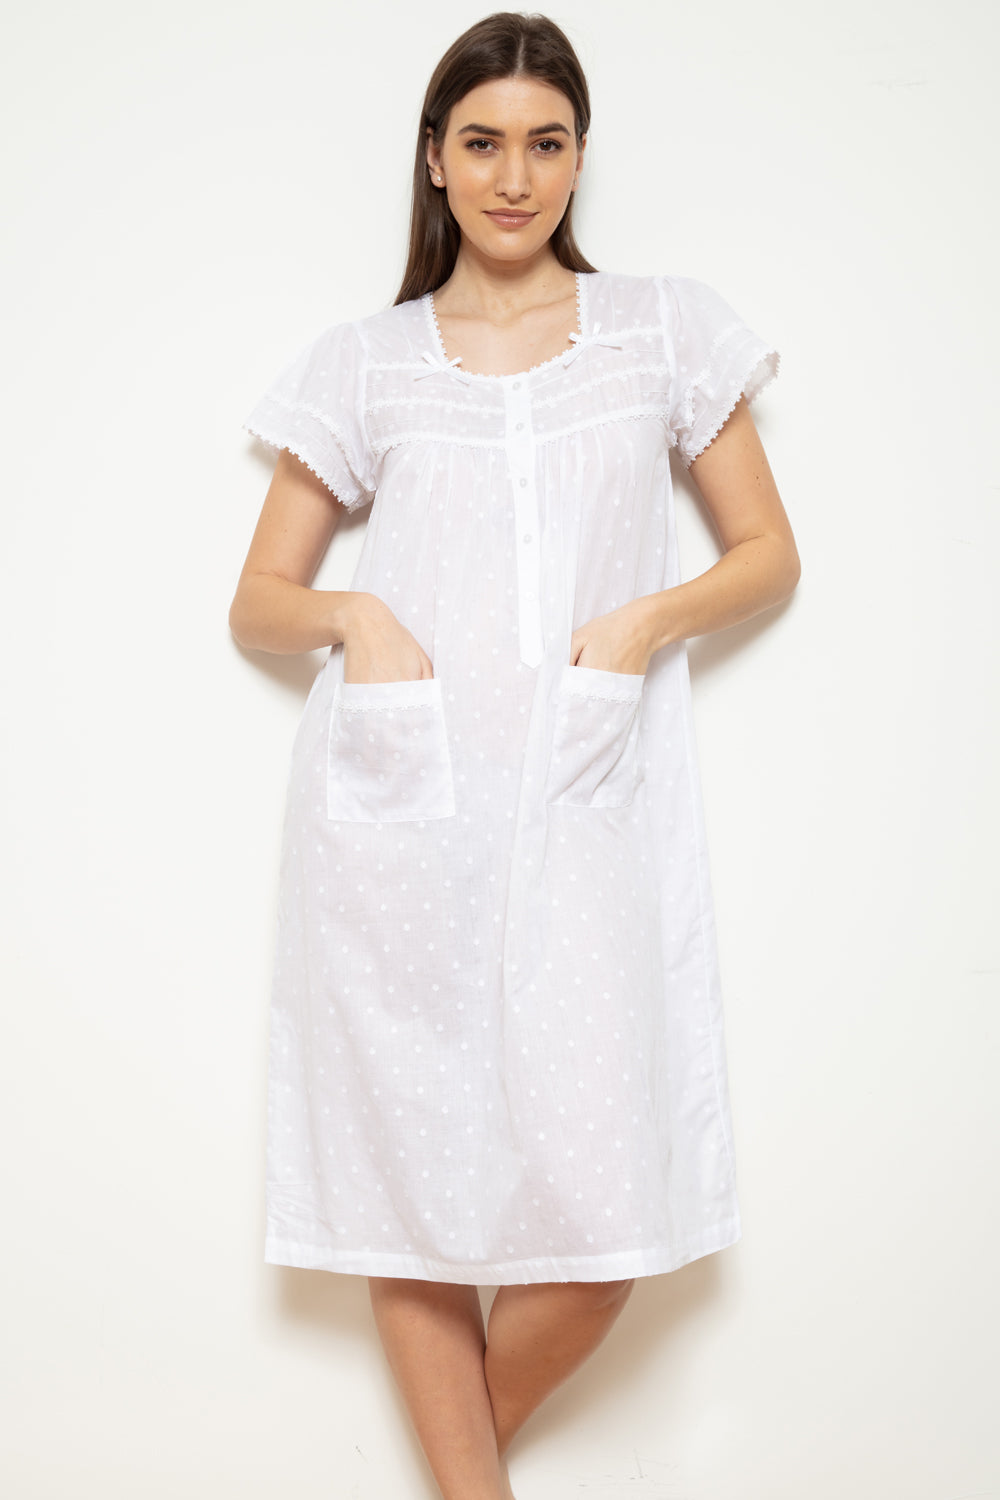 Cottonreal 'Jane' Cotton Voile Jacquard Polka Dot Short Sleeve Nightdress